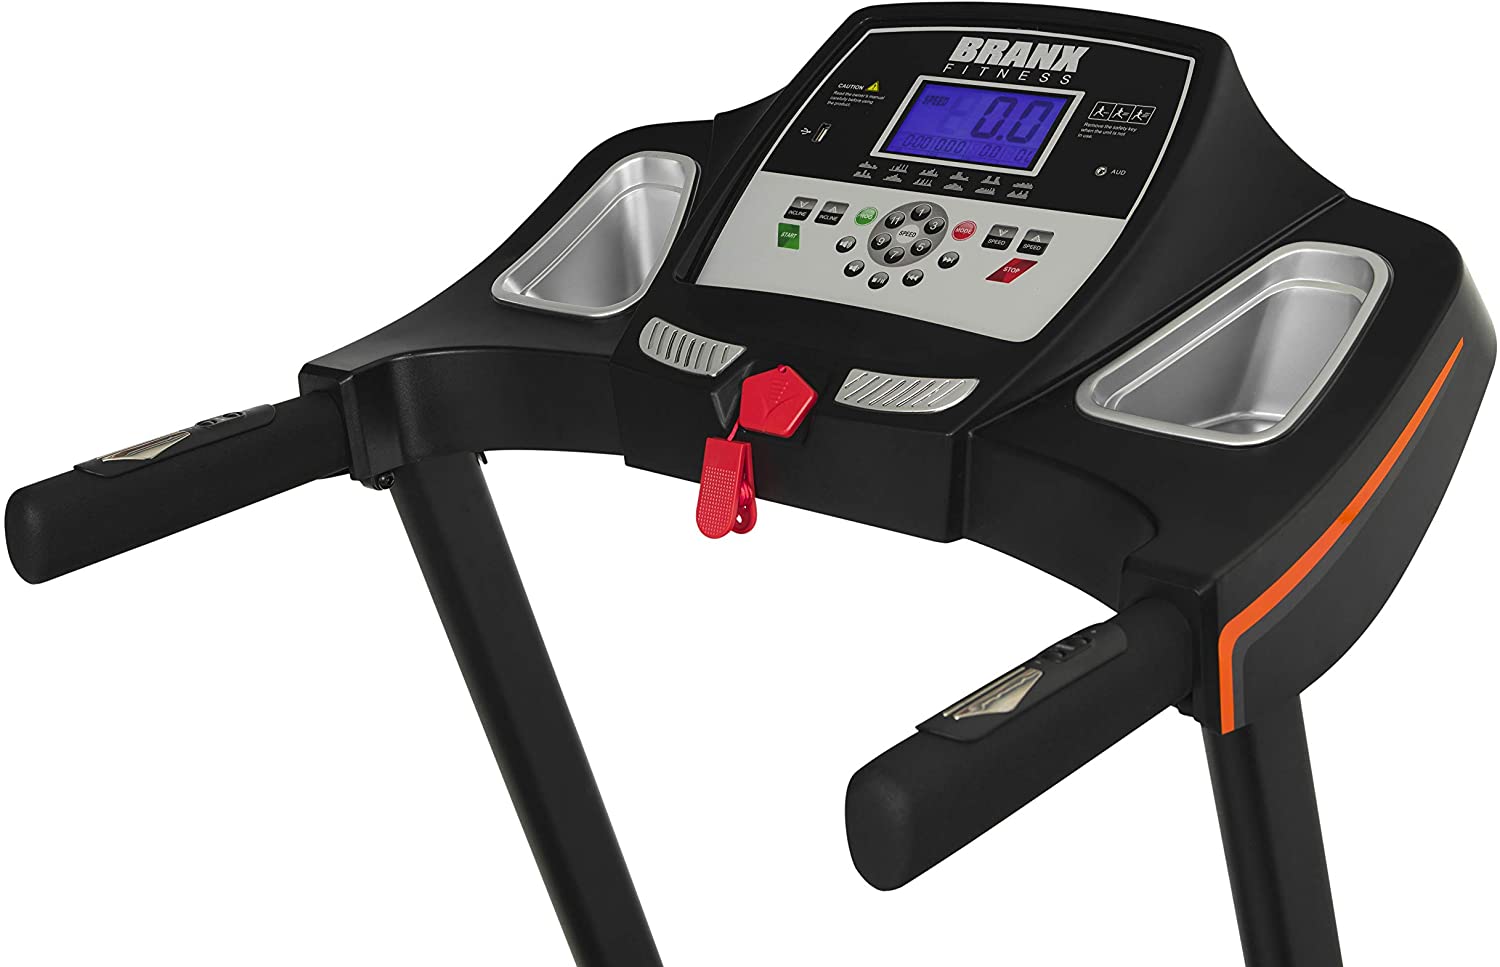 Branx Fitness Energy Pro Treadmill dash